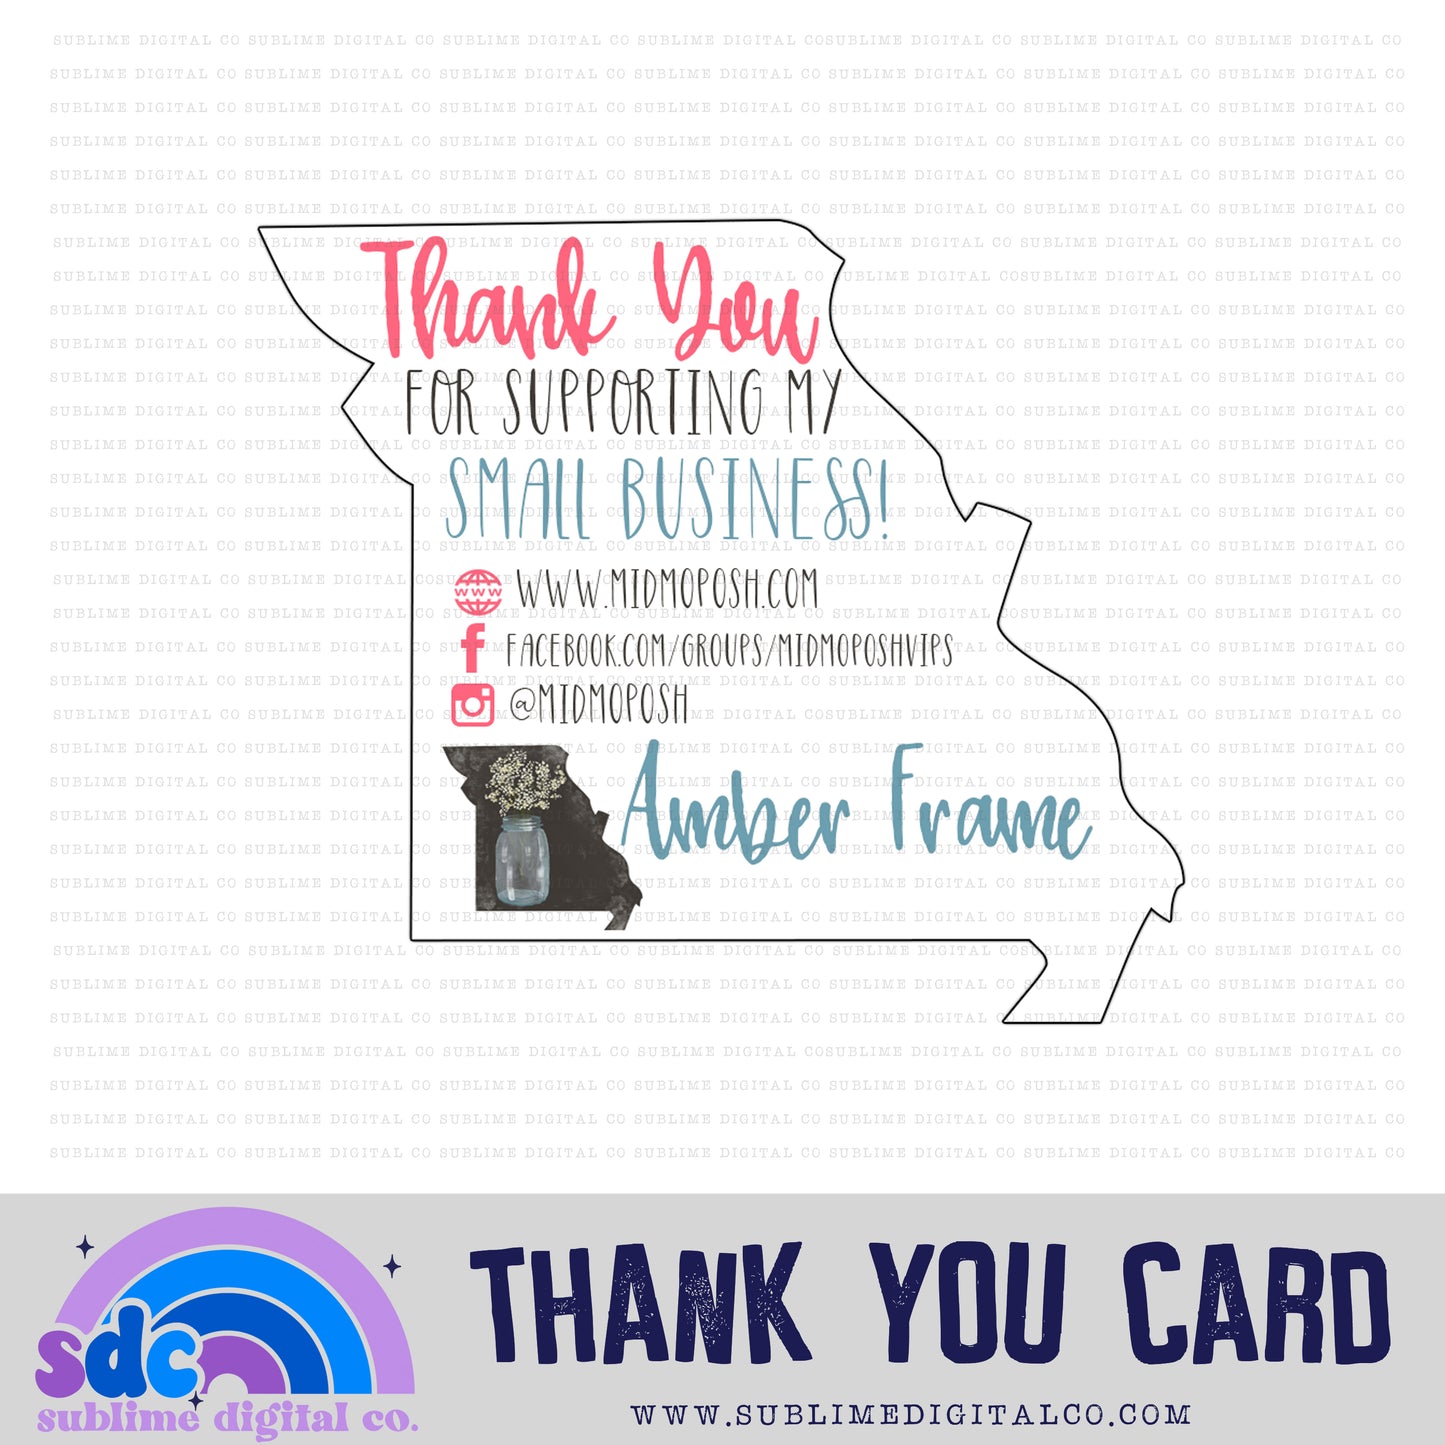 Thank You Card Design • Business Branding • Custom Digital Designs